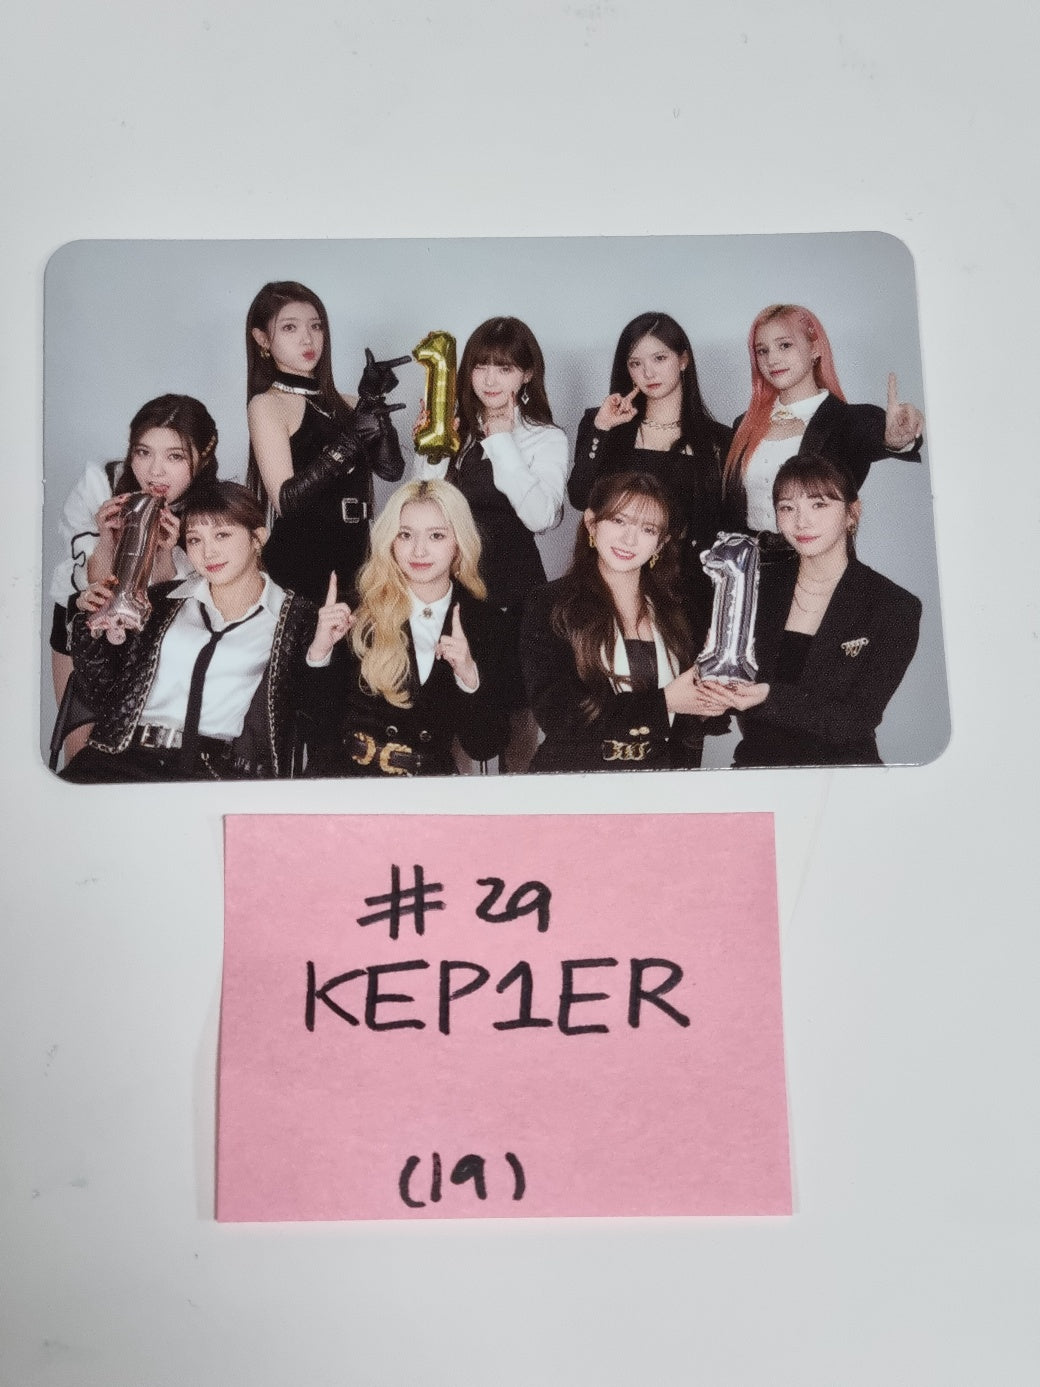 Kep1er "데뷔 1주년" - Official MD [랜덤 포토카드] [2/13 업데이트]